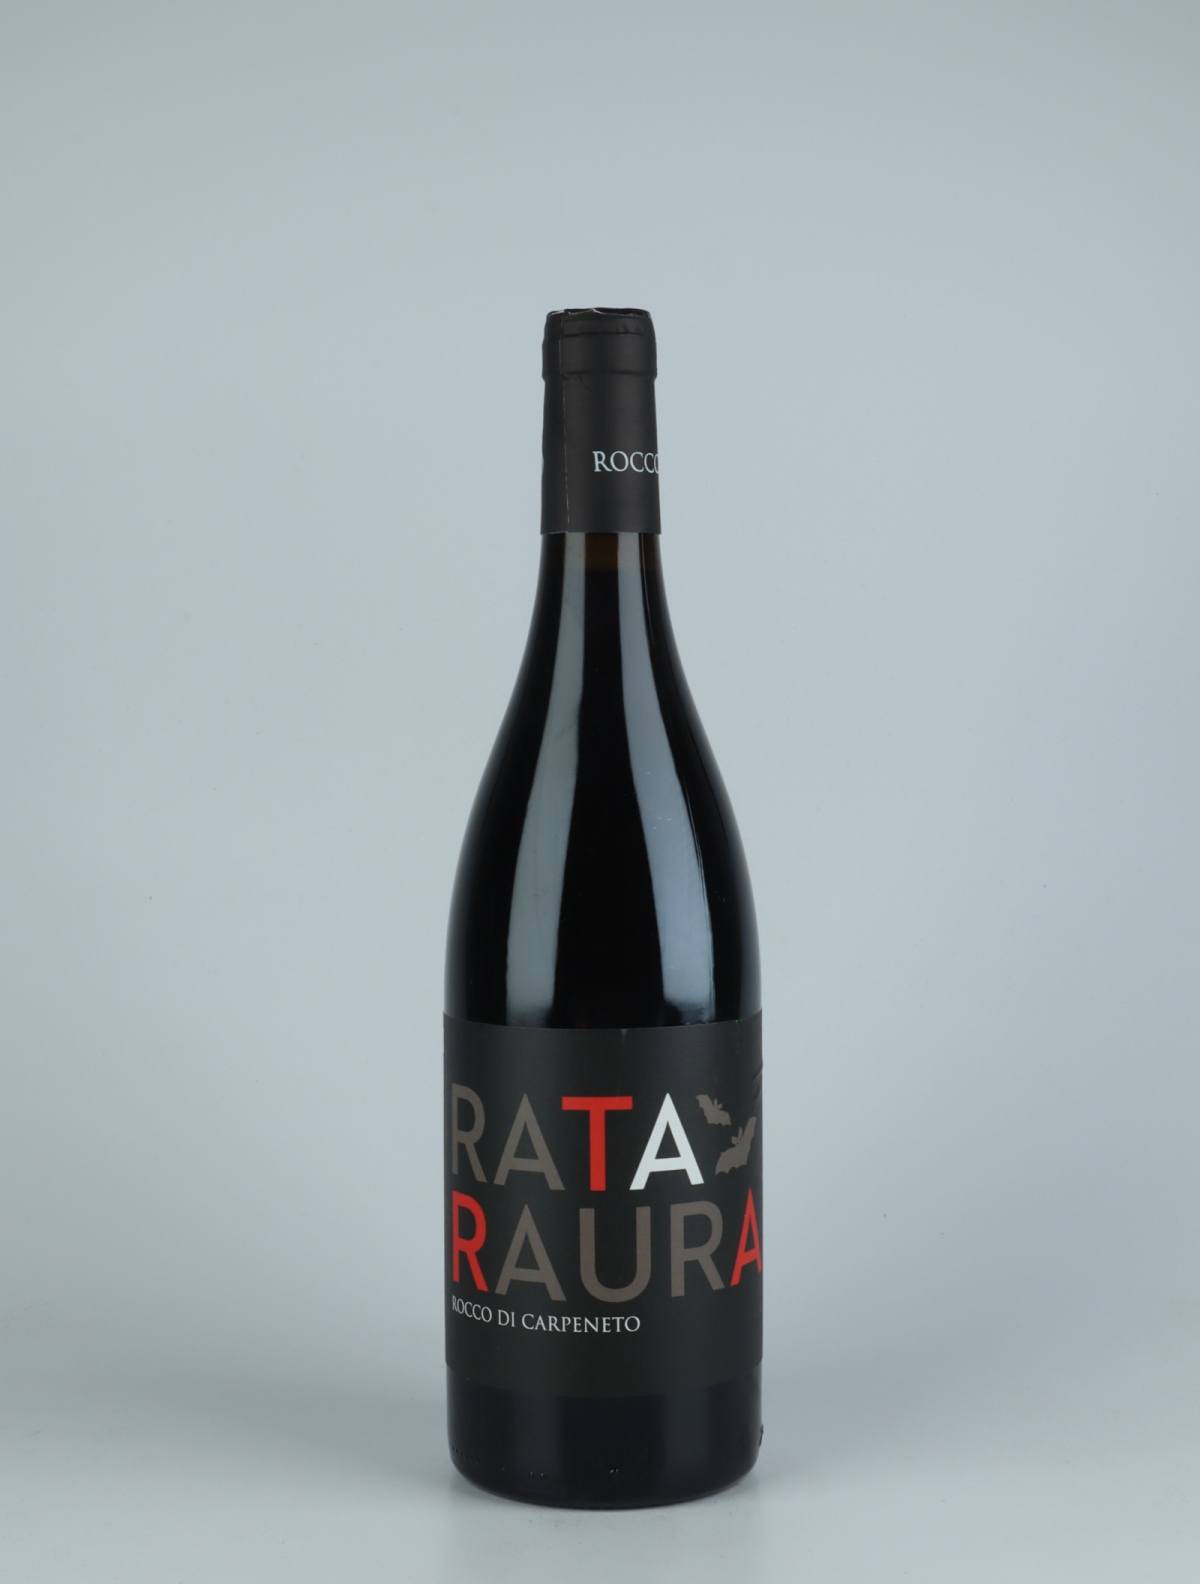 A bottle 2019 Rataraura Red wine from Rocco di Carpeneto, Piedmont in Italy